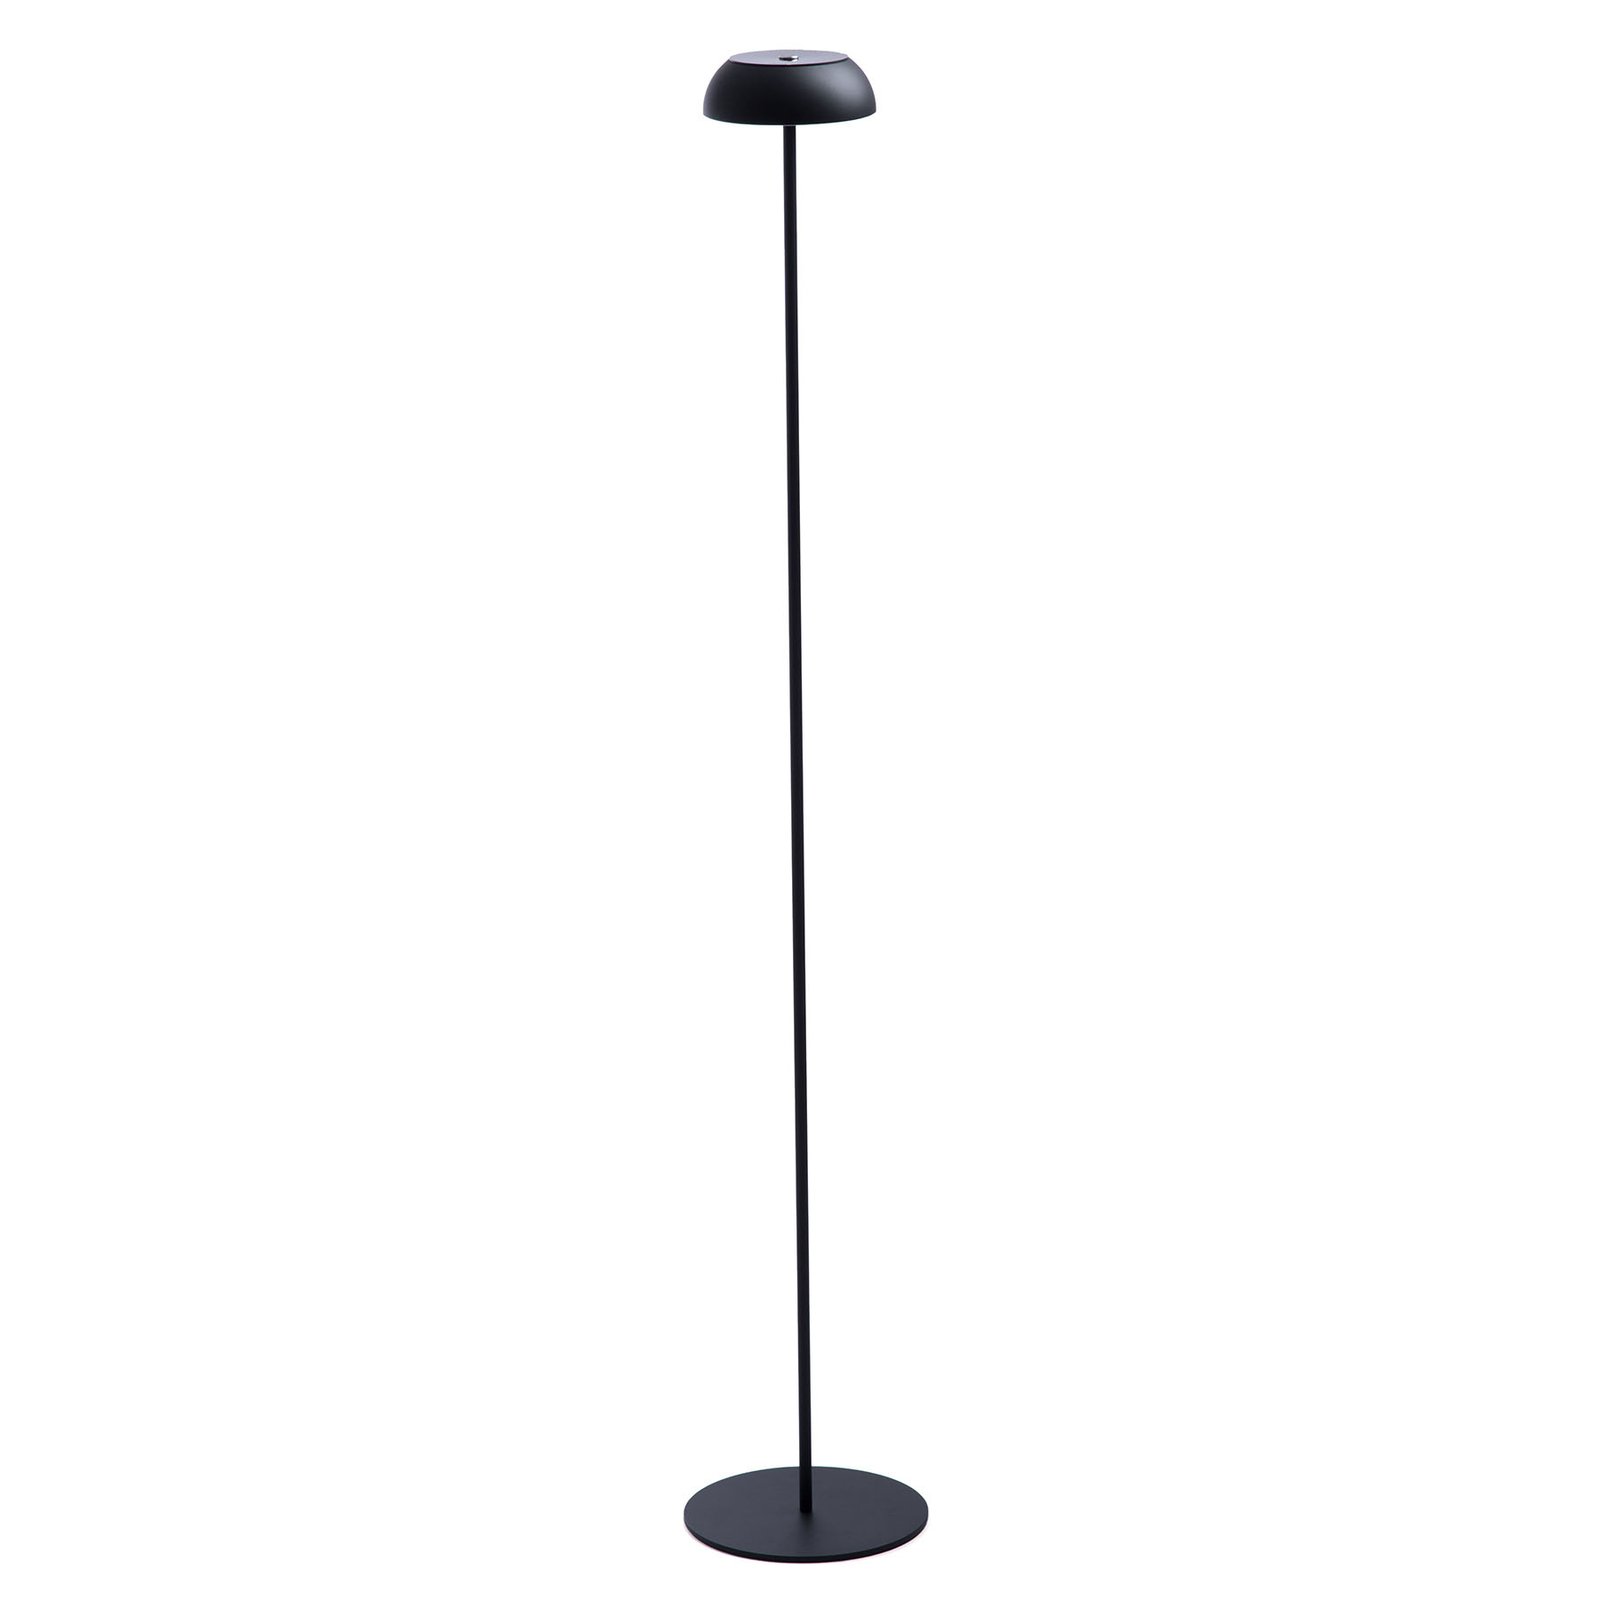 Axolight Float lampadaire de designer LED, noir